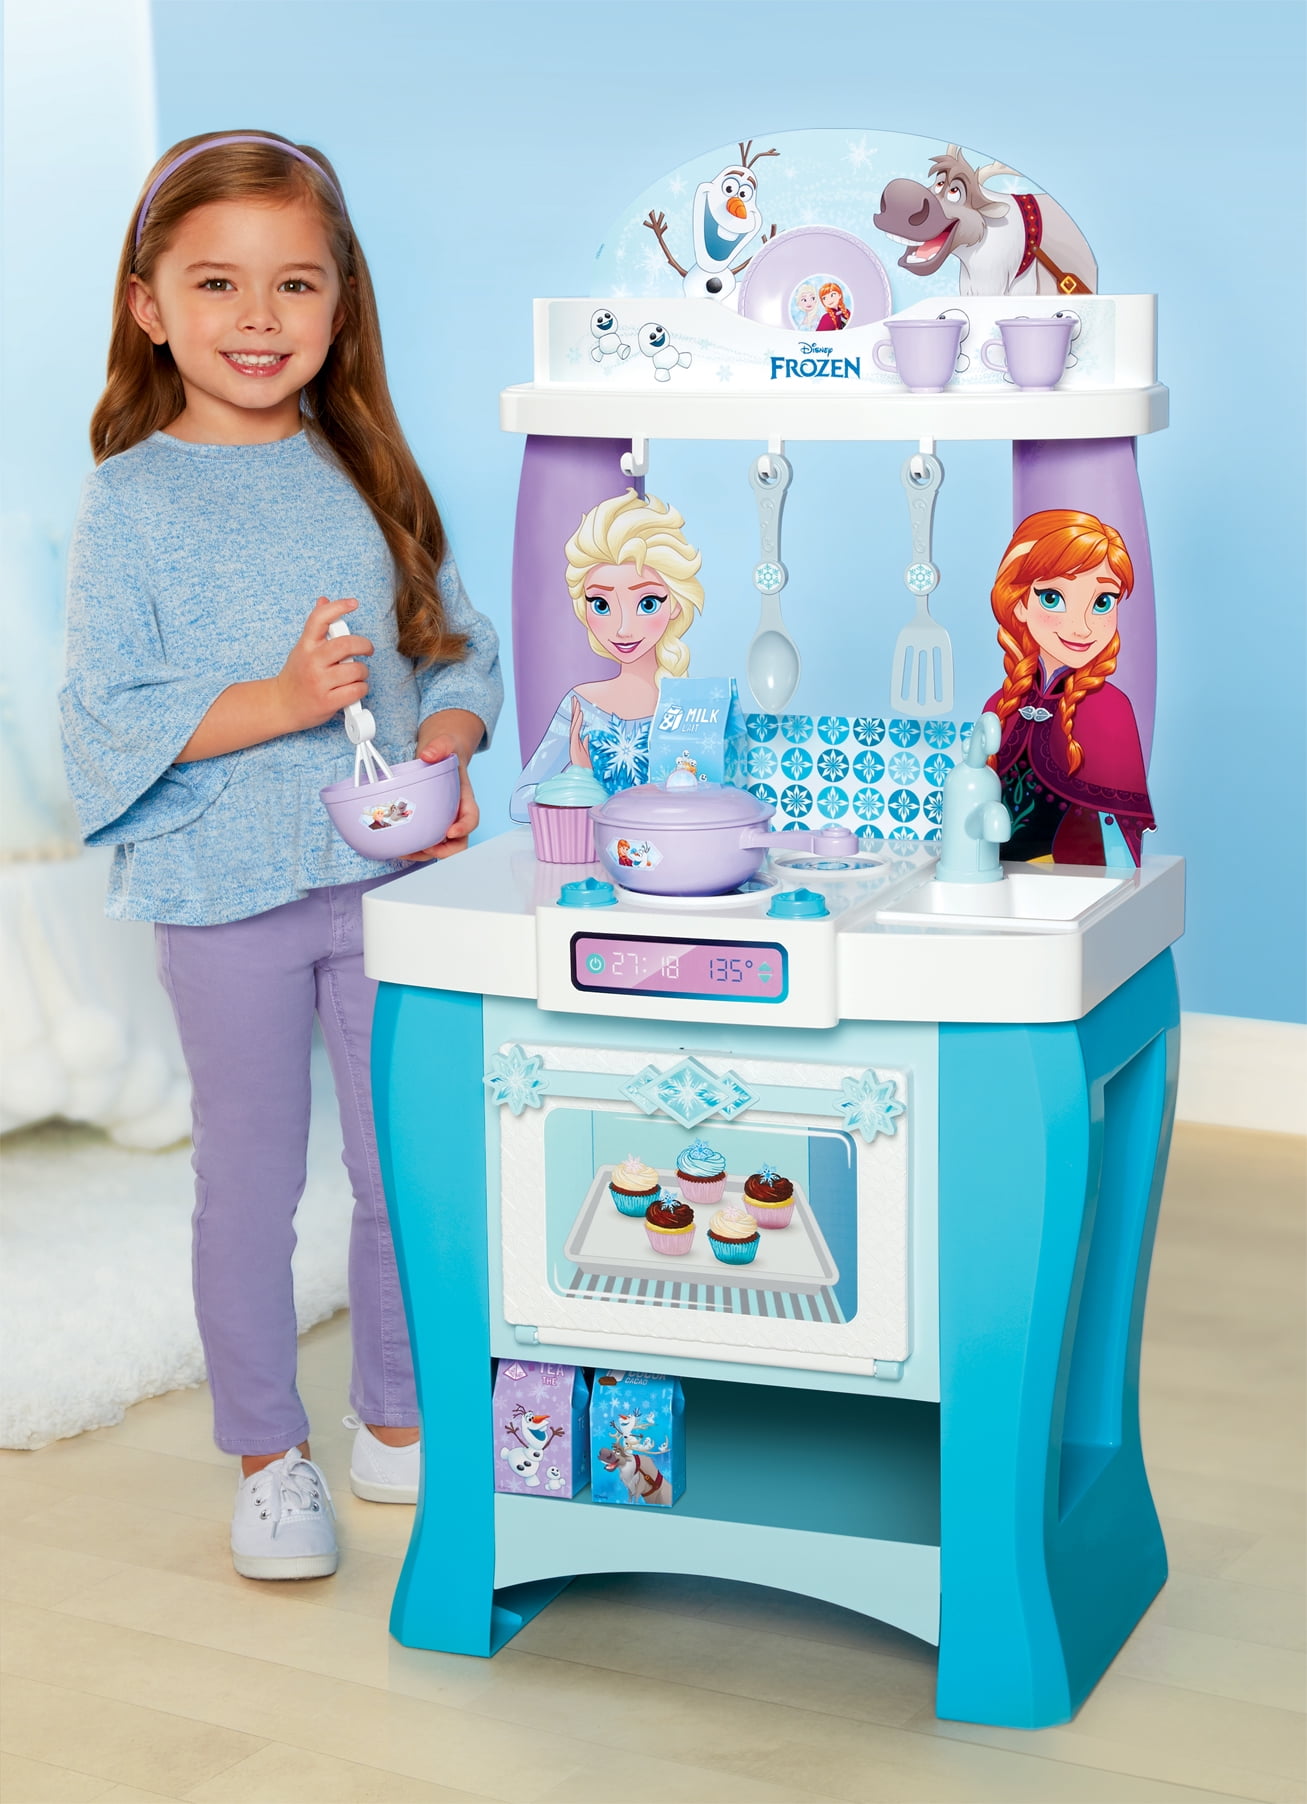 Disney FROZEN Role Play Mini Kitchen Pantry Set Kids Pretend Toy Gift 3-8Y